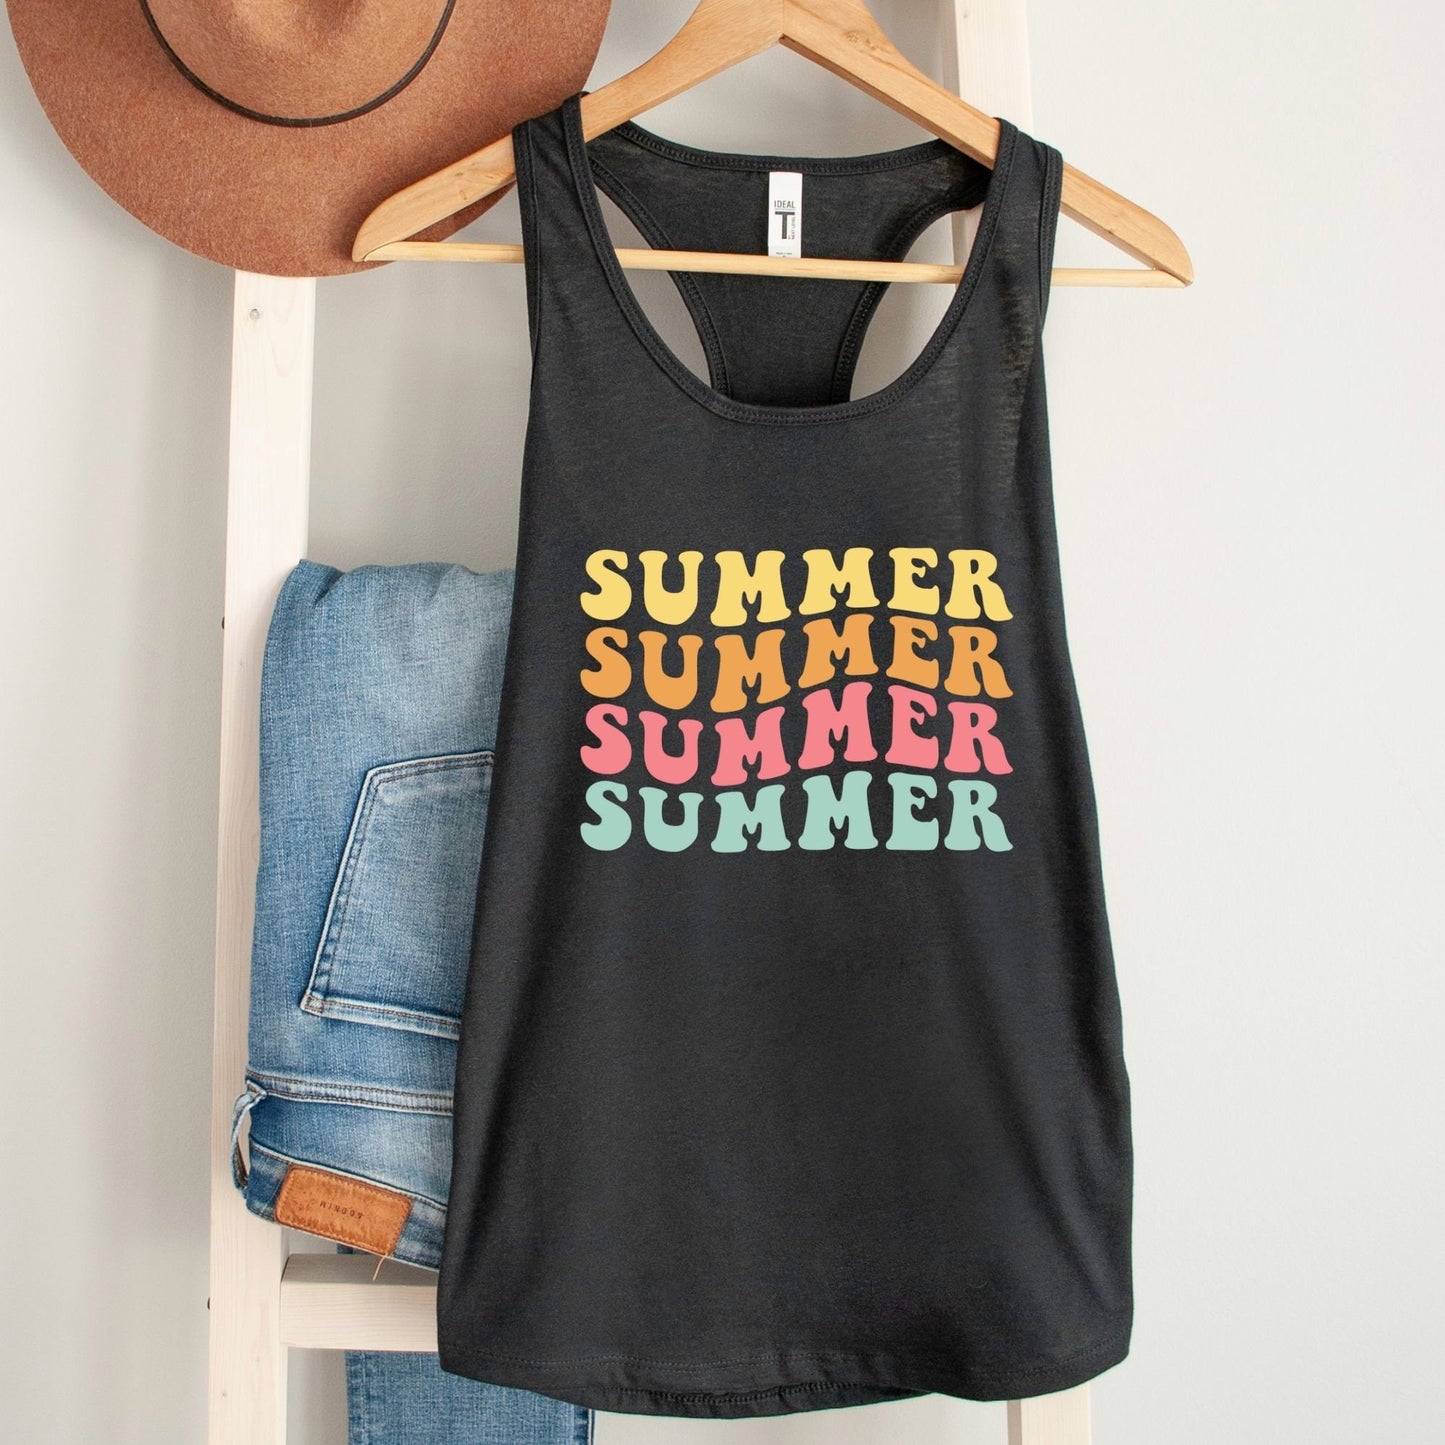 Retro Summer Tank Top, Colorful Summer Shirt, Summer Clothing for Women, Racerback Tank Top for Women, Beach Shirt, Summer Graphic Tee